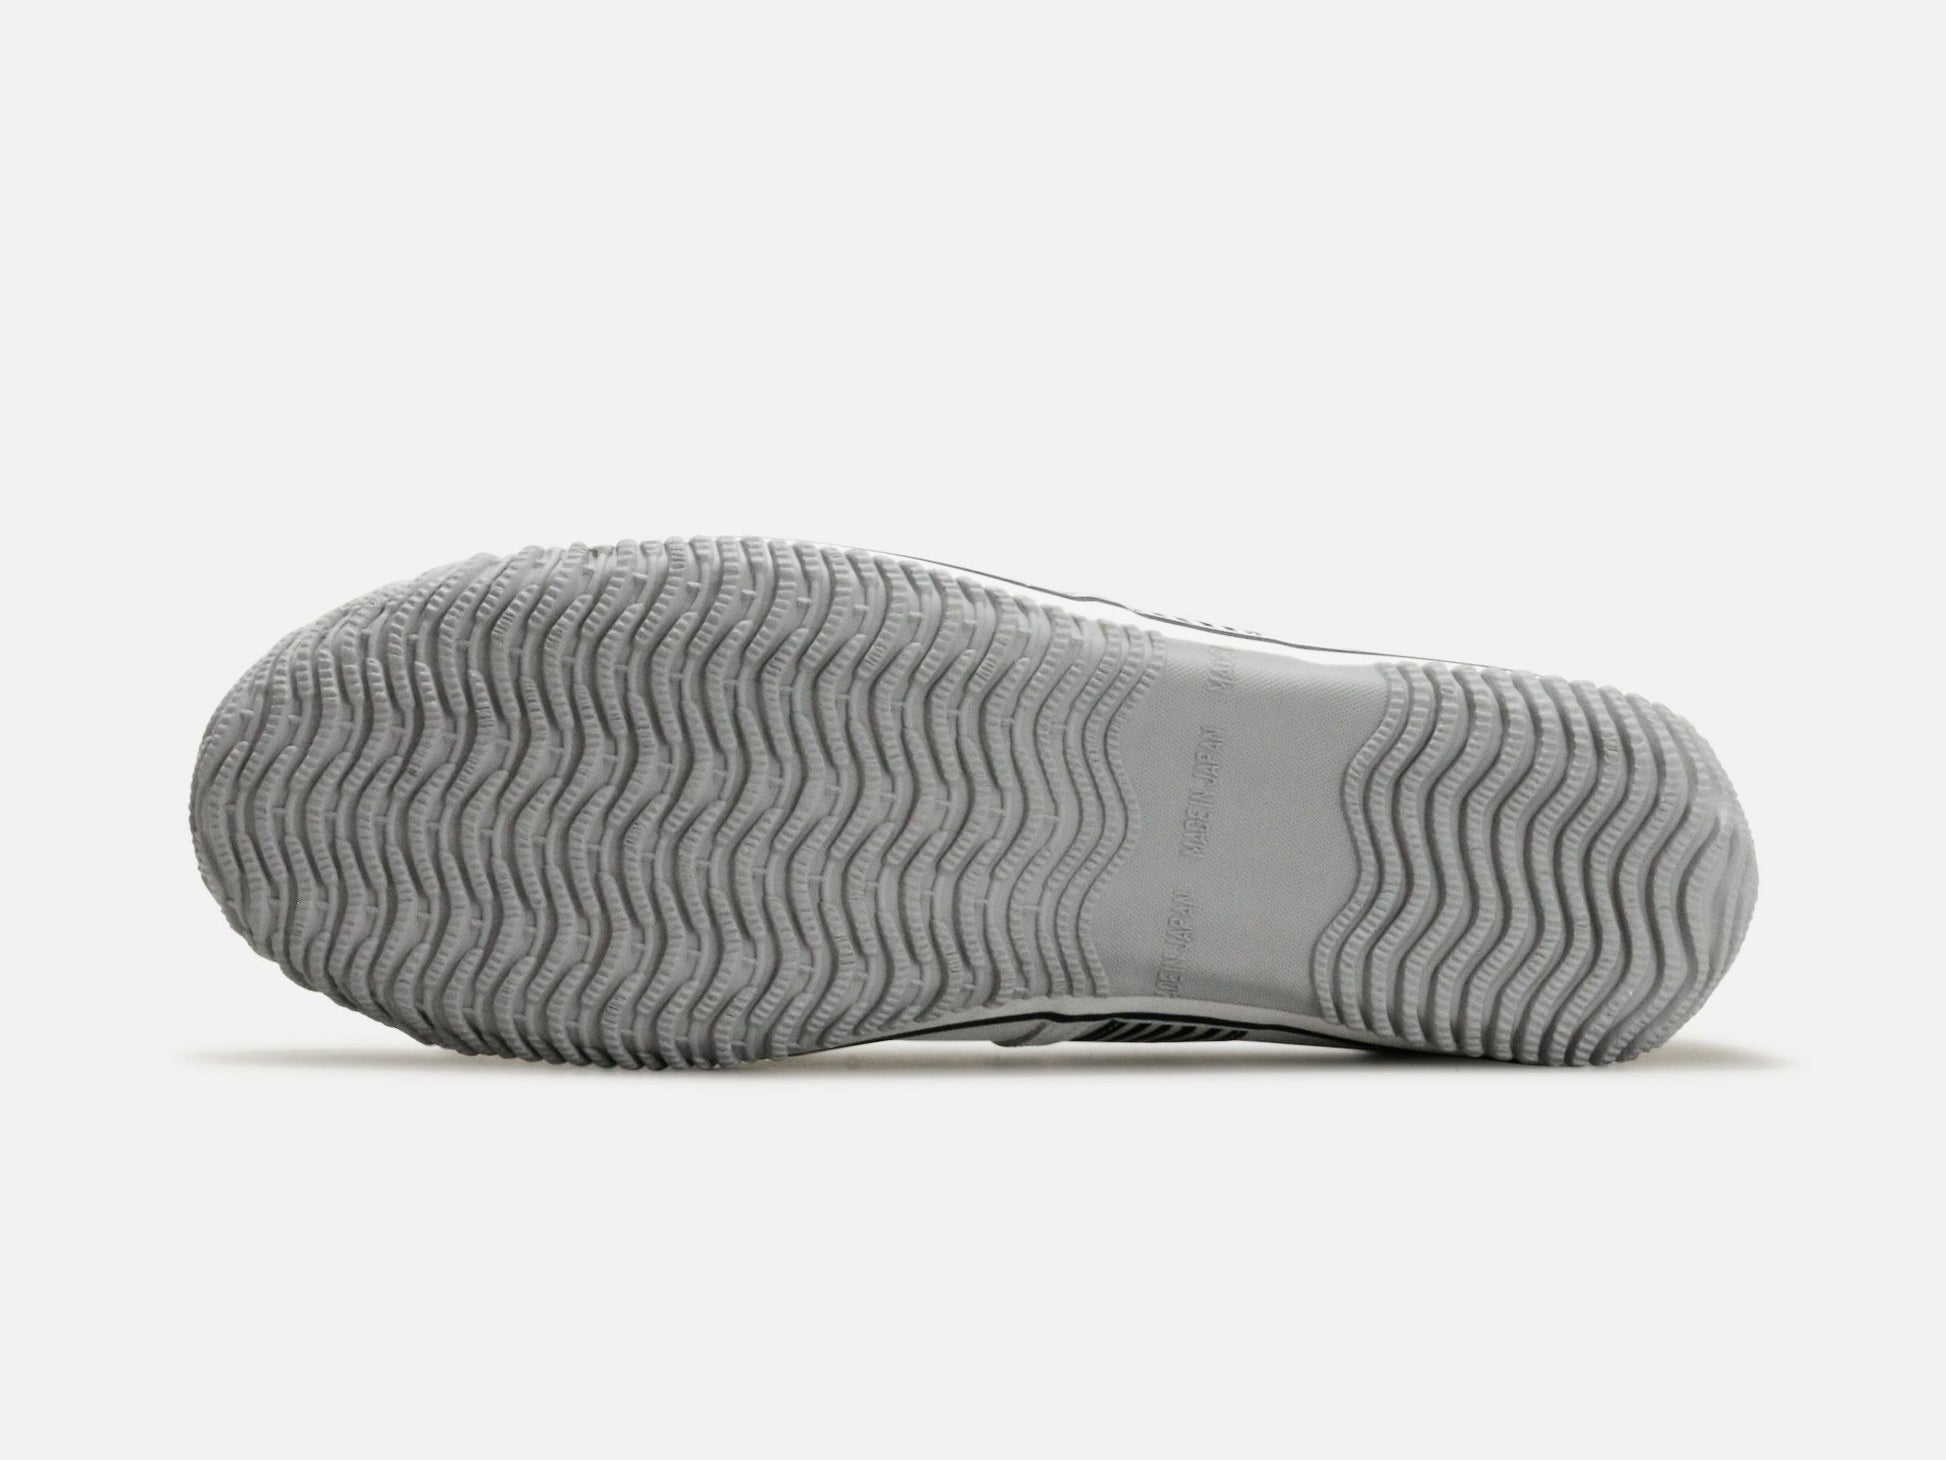 SPINGLE MOVEのスニーカー「SPM-168 White/Navy」の靴底の商品画像